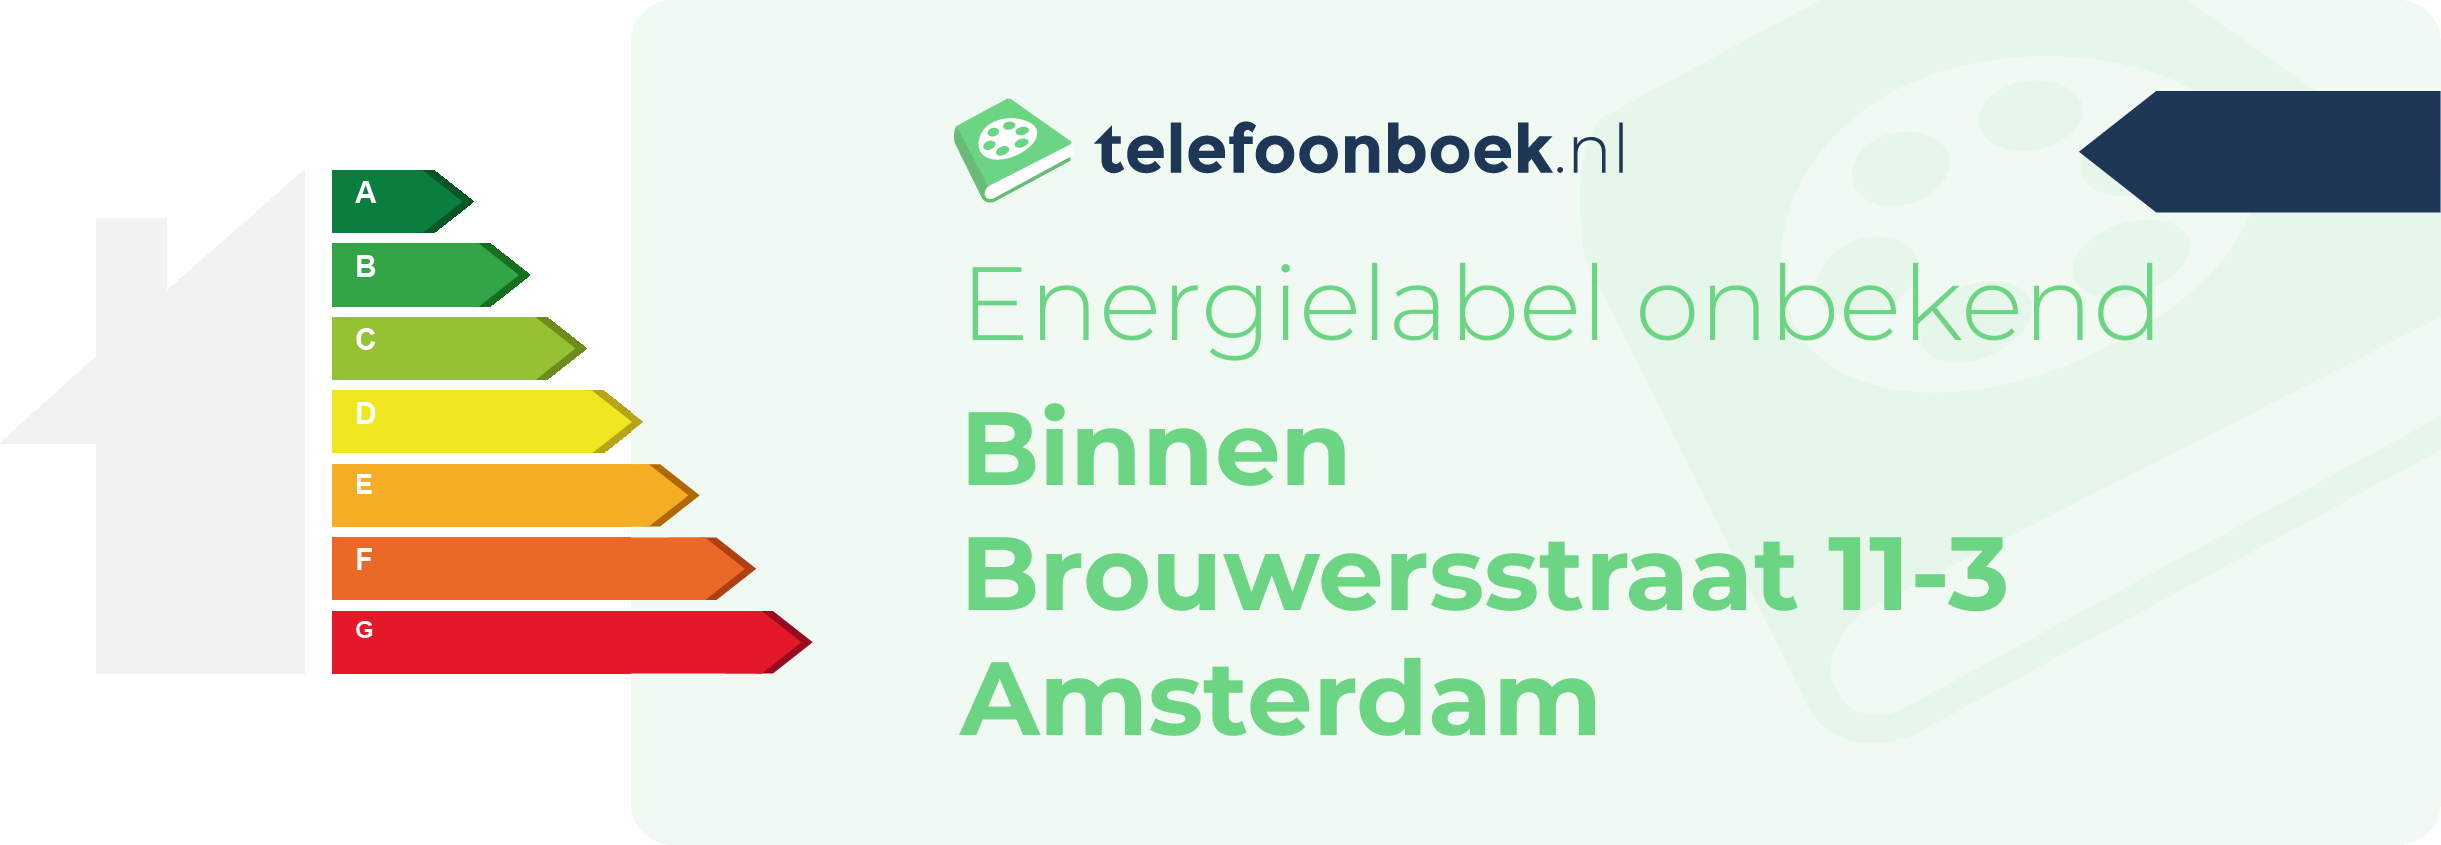 Energielabel Binnen Brouwersstraat 11-3 Amsterdam